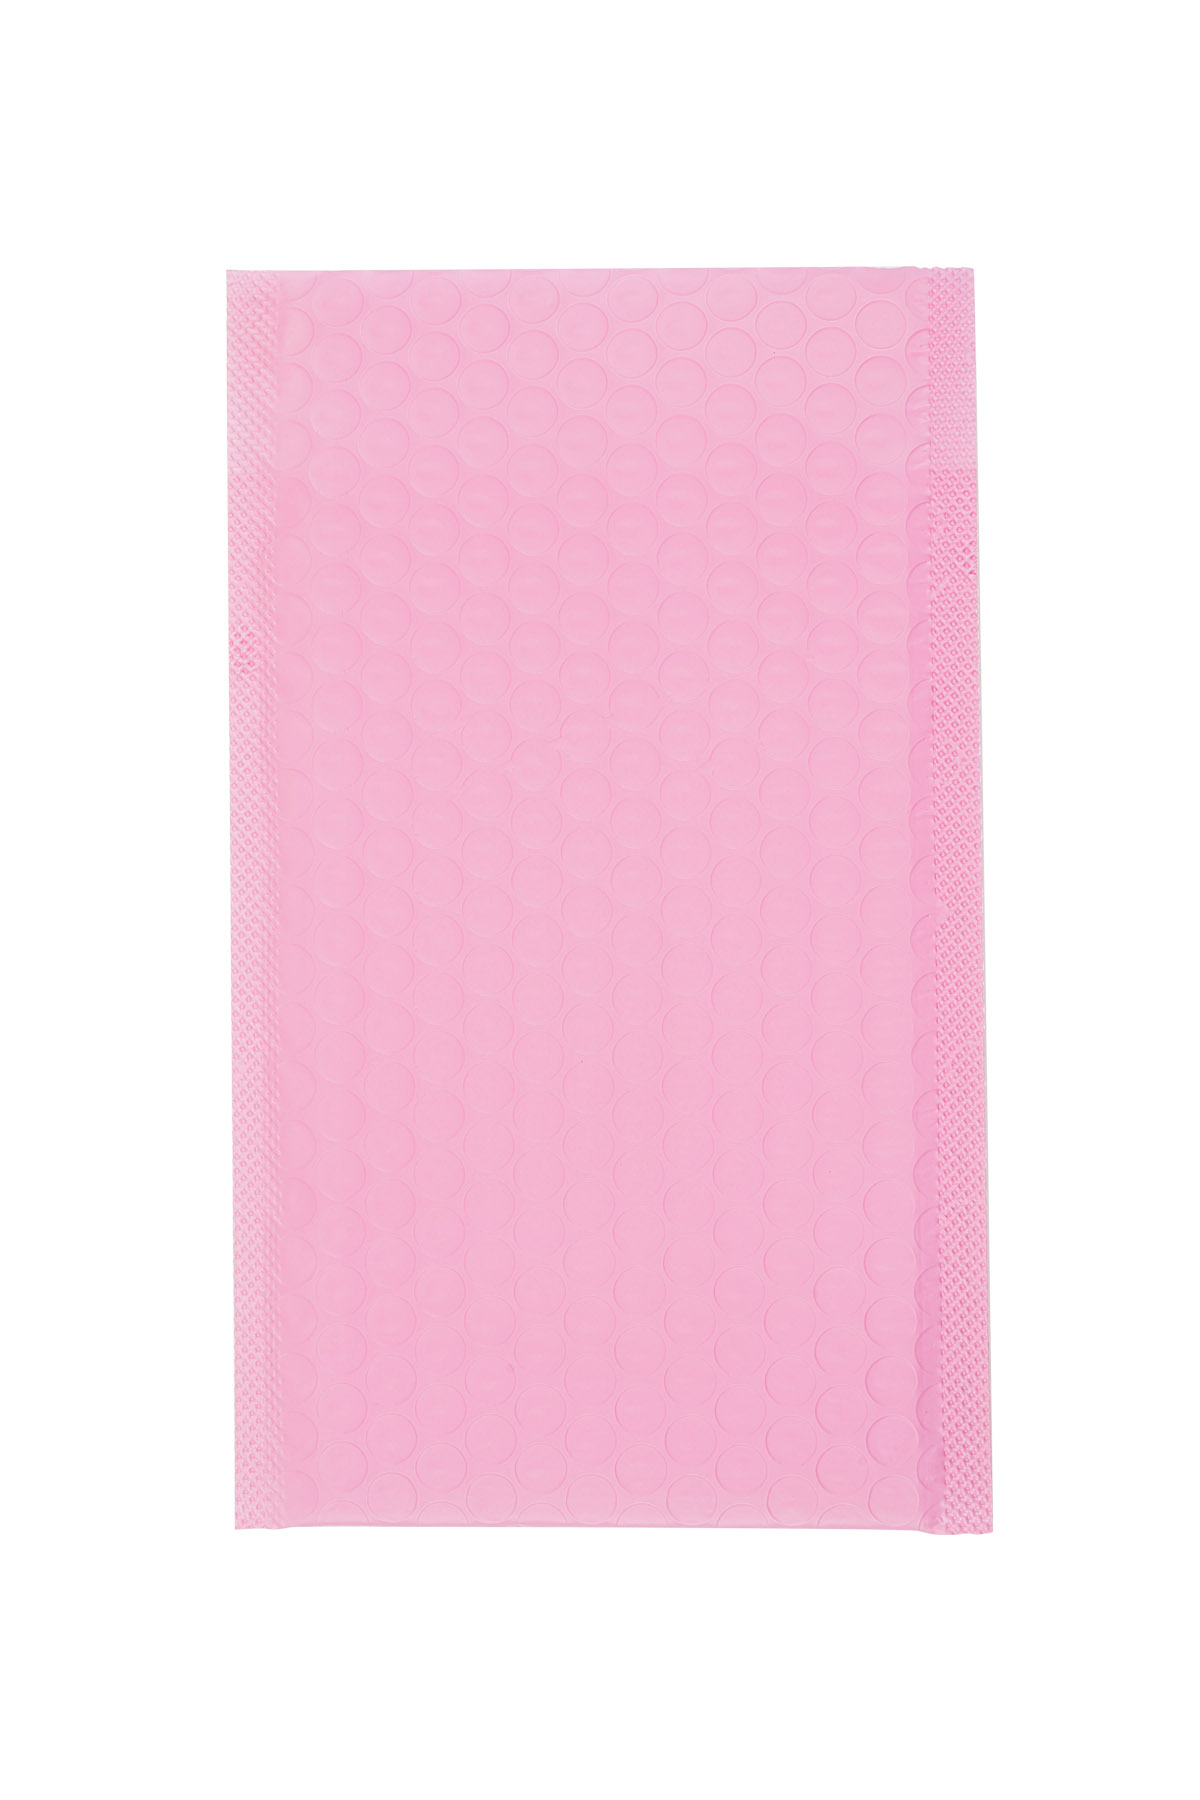 Sac postal bulle - rose pastel Plastique h5 Image2